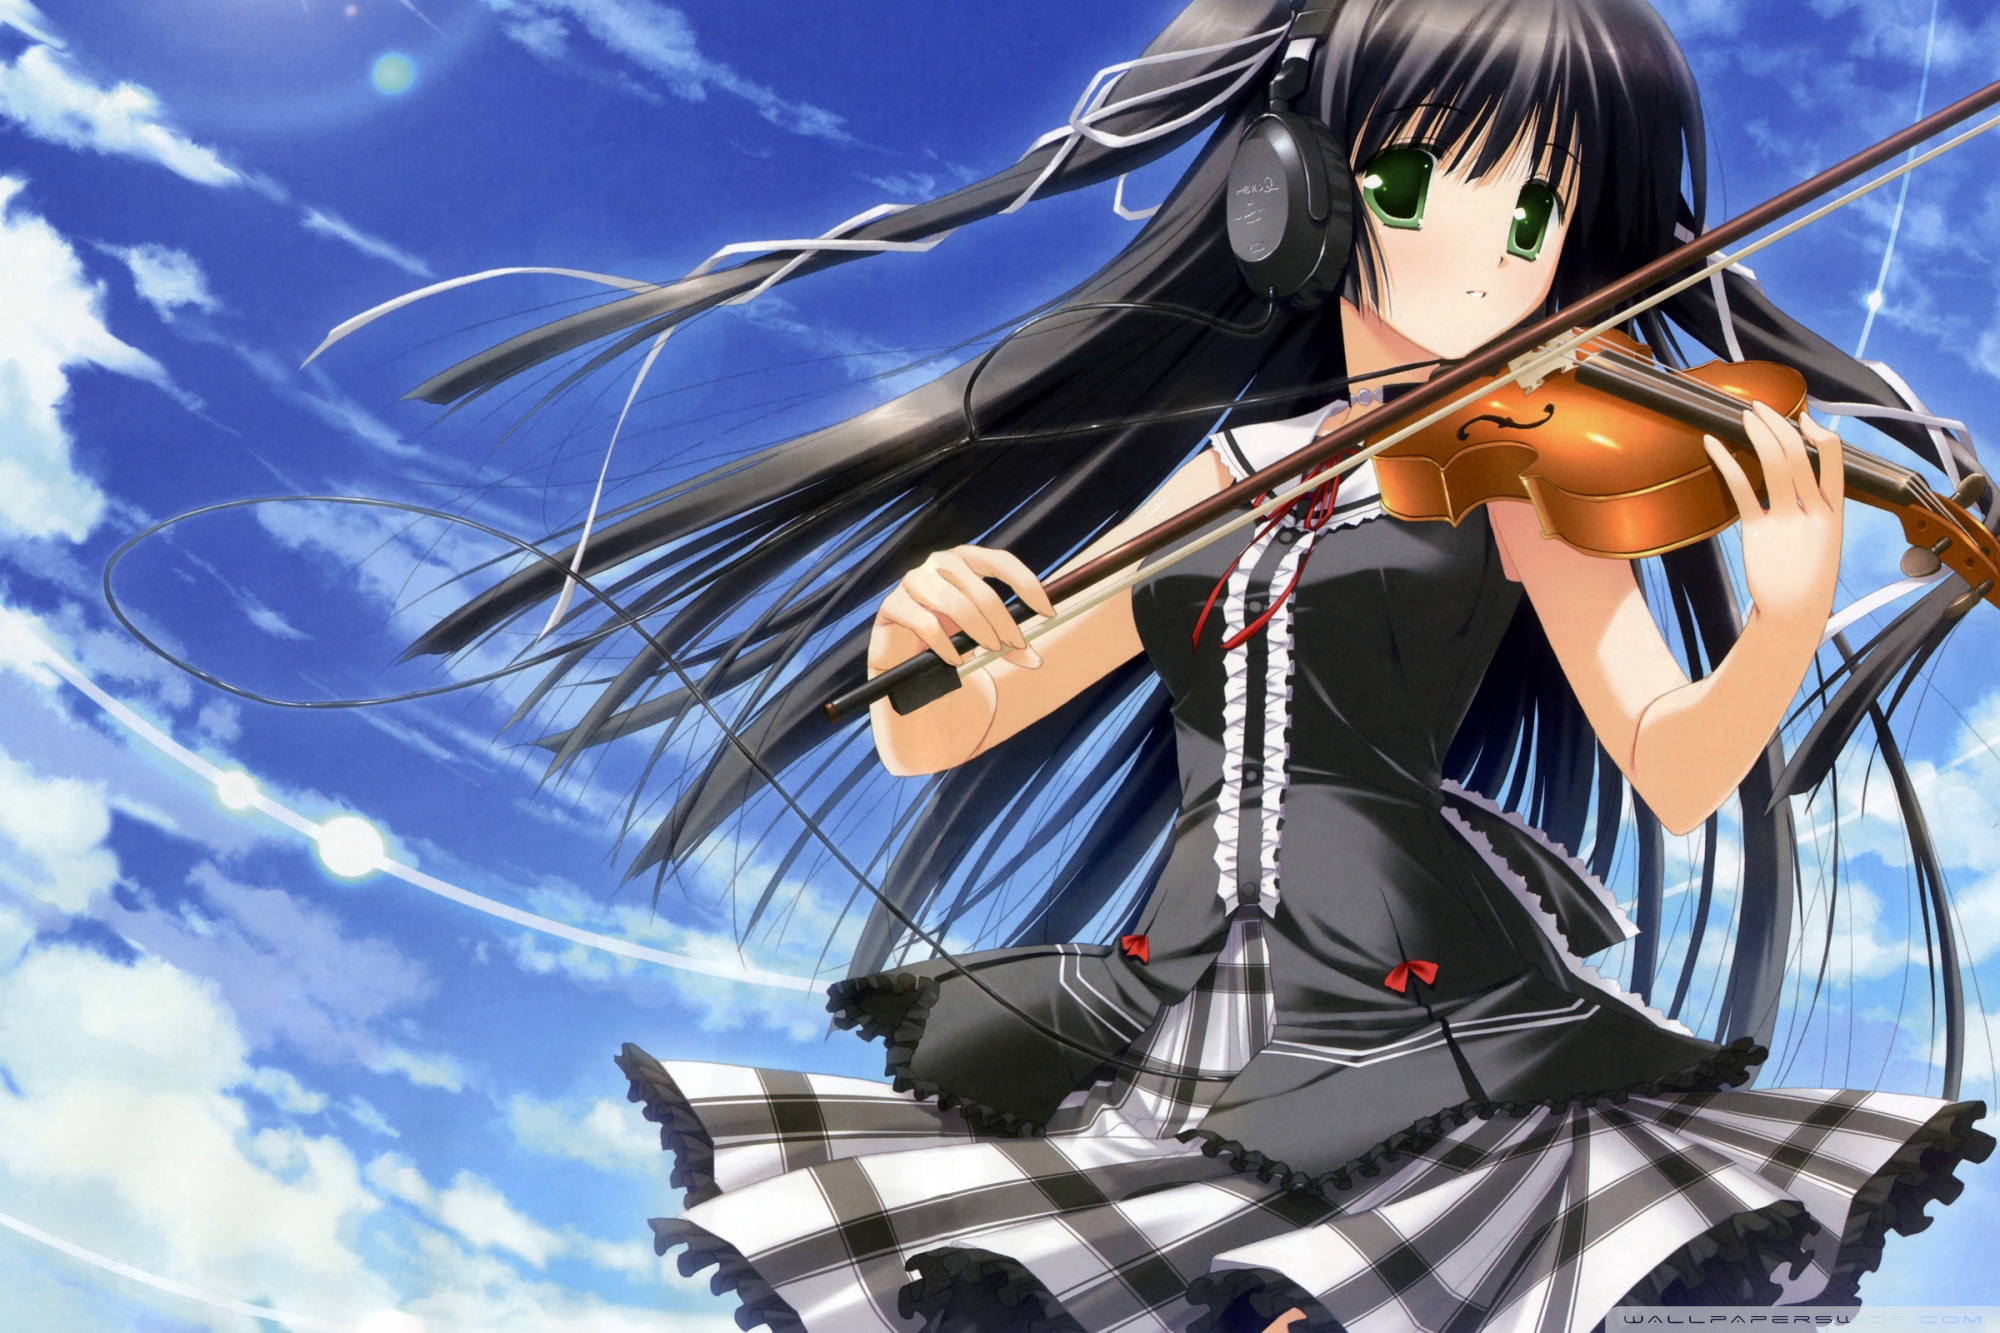 Anime Girl Playing Violin Ultra HD Desktop Background Wallpaper for 4K UHD TV, Tablet